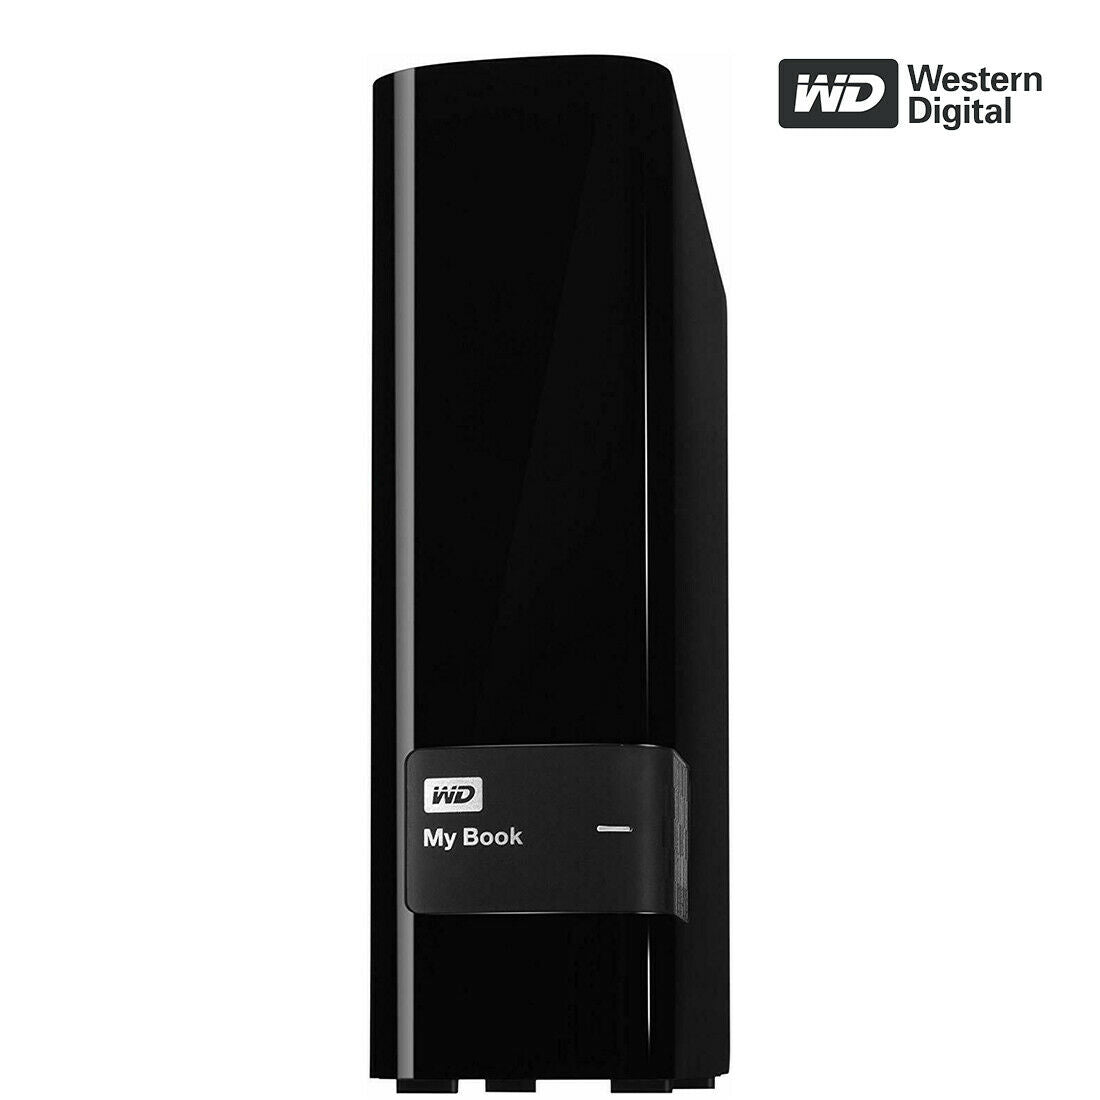 New WD My Book 3.5" 4TB USB 3.0 Desktop External Hard Drive WDBFJK0040HBK-NESN